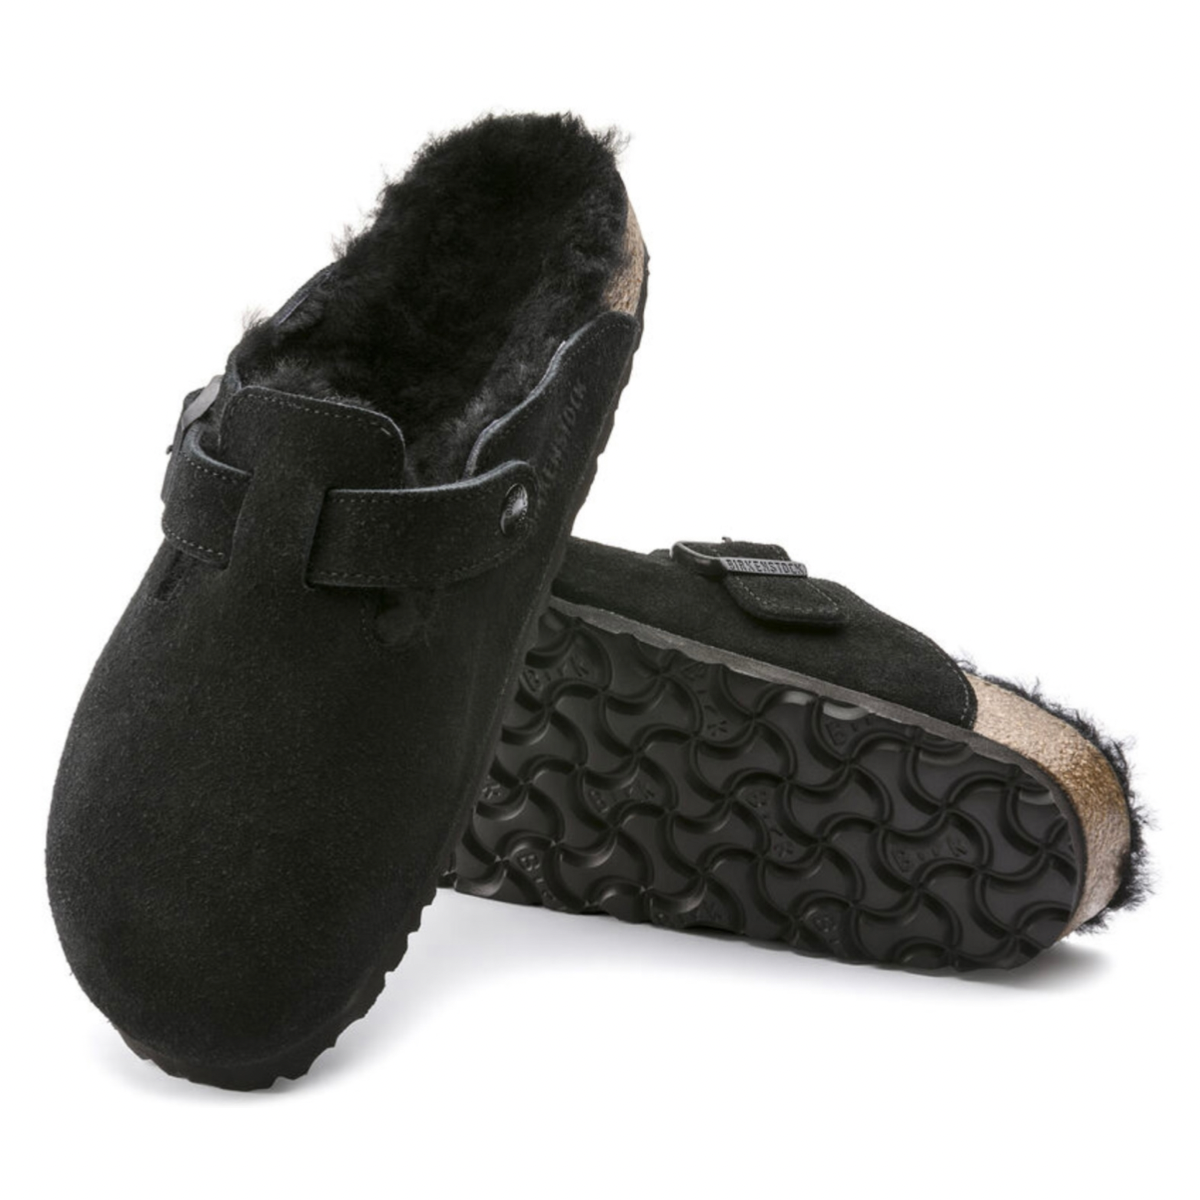 Boston Shearling - shoe&me - Birkenstock - Clog - Clogs, Slippers, Unisex, Winter